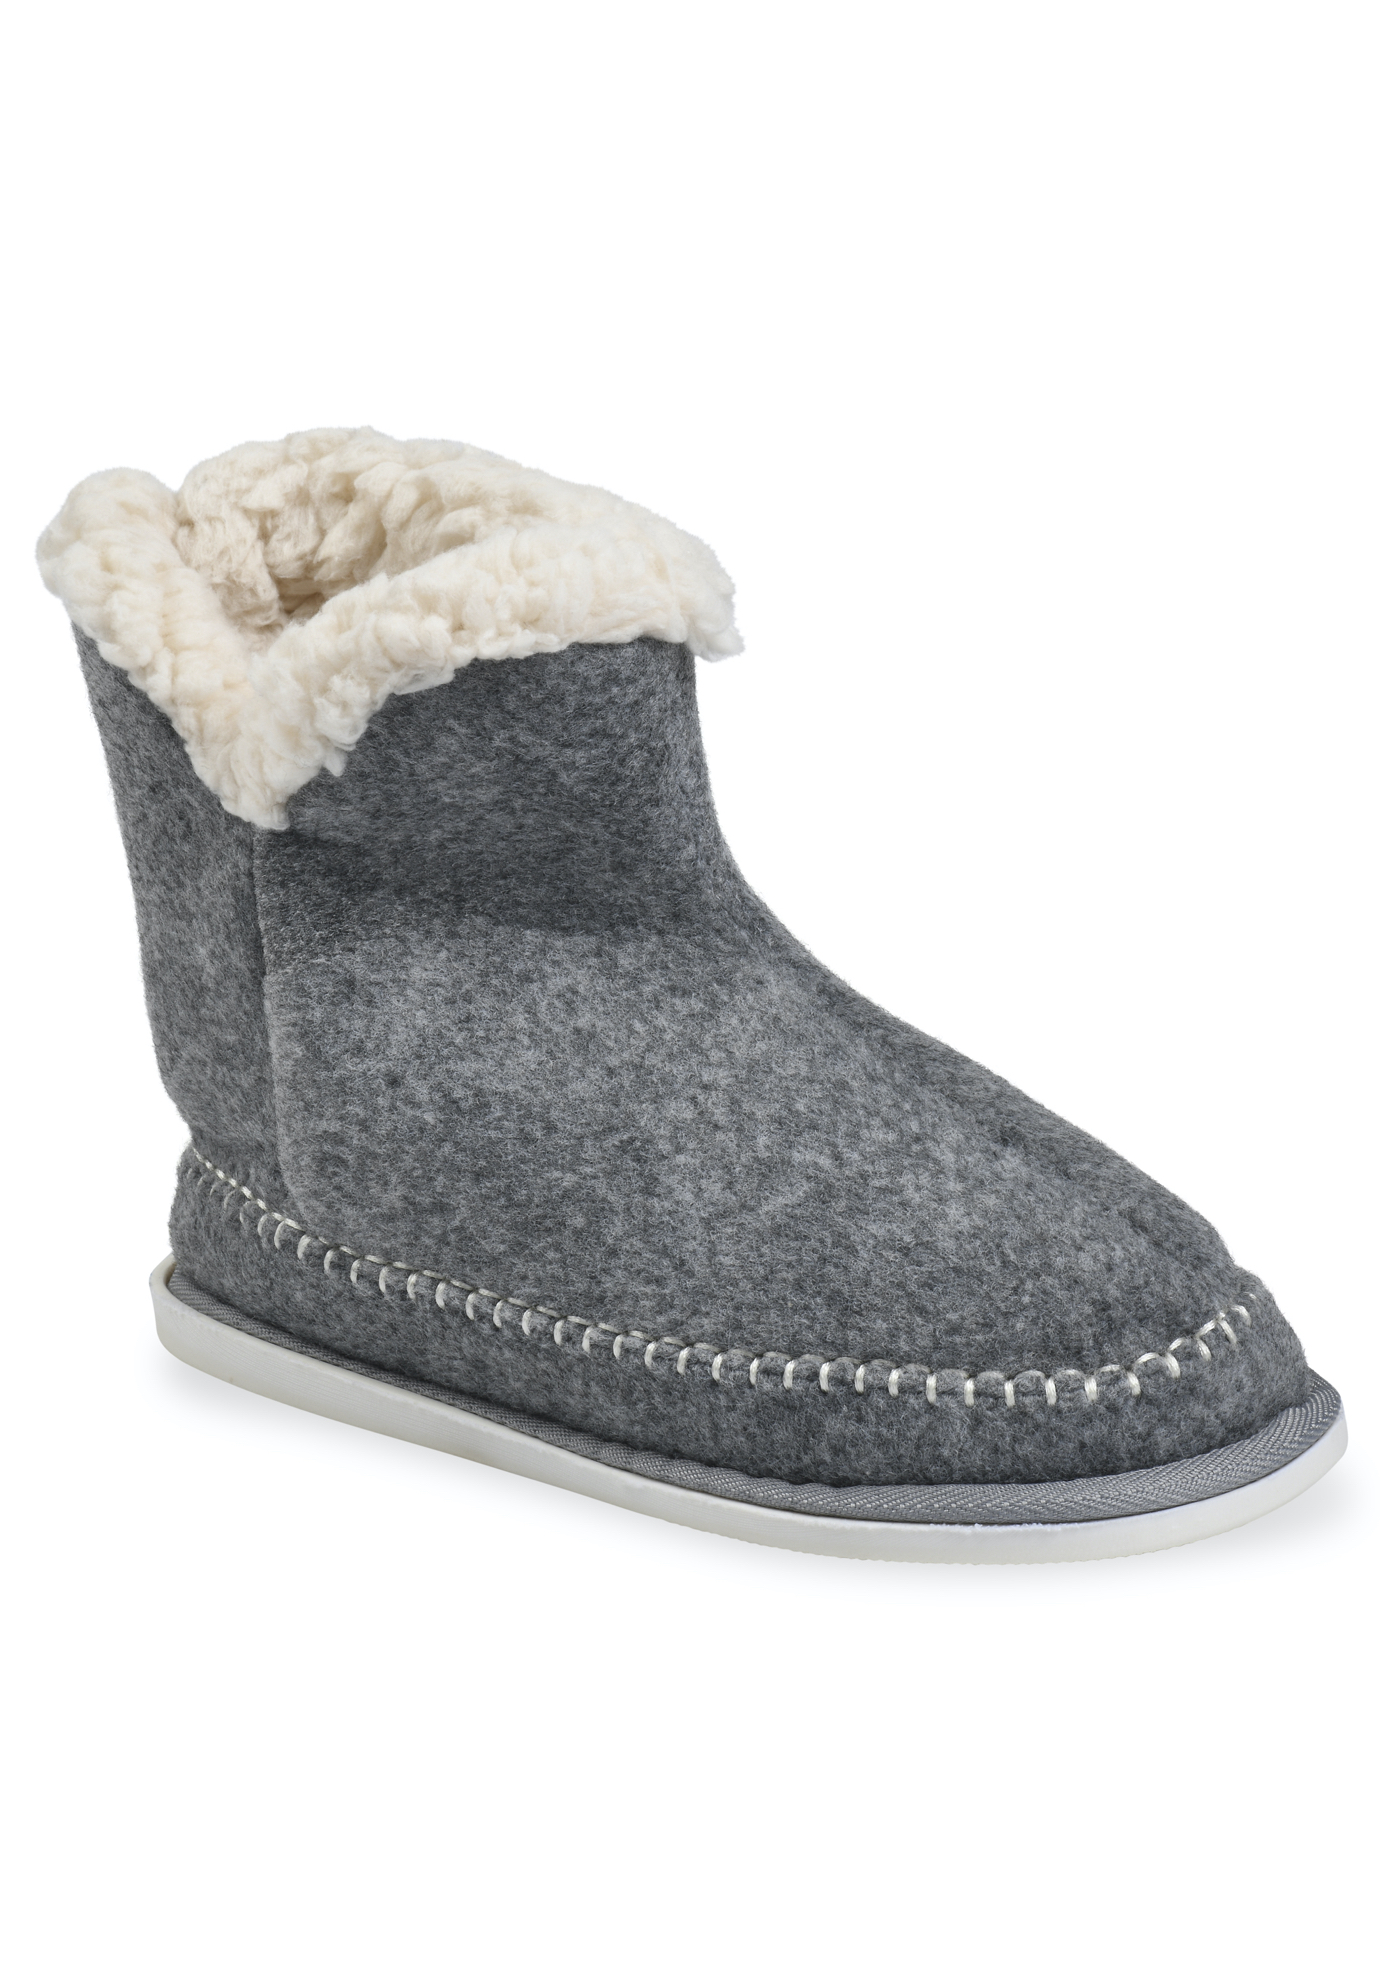 Faux Fur Wool Moccasin Slipper Boot, 